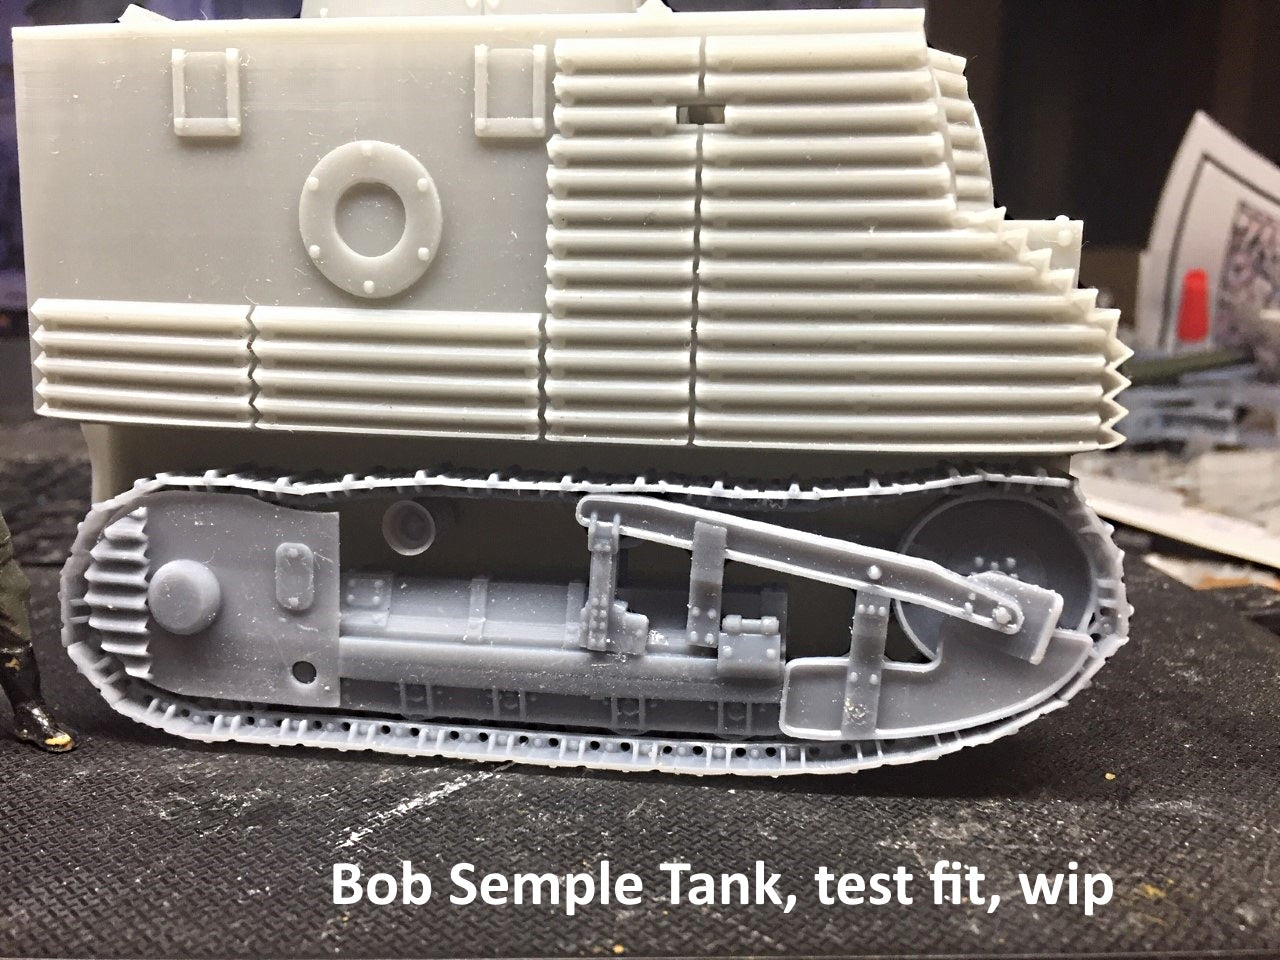 1/35 Bob Semple Tank